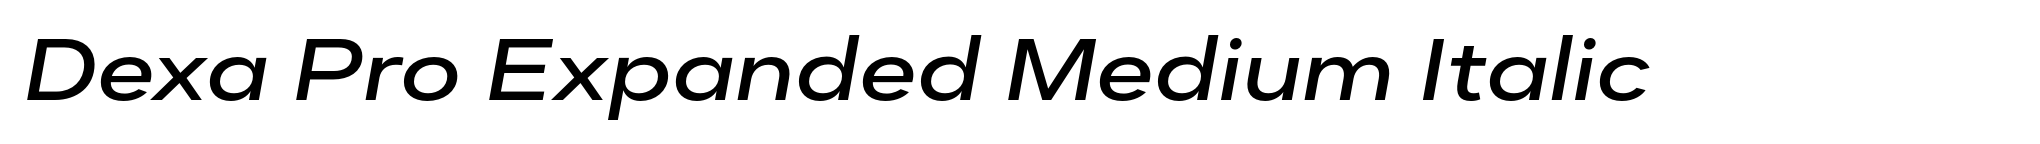 Dexa Pro Expanded Medium Italic image